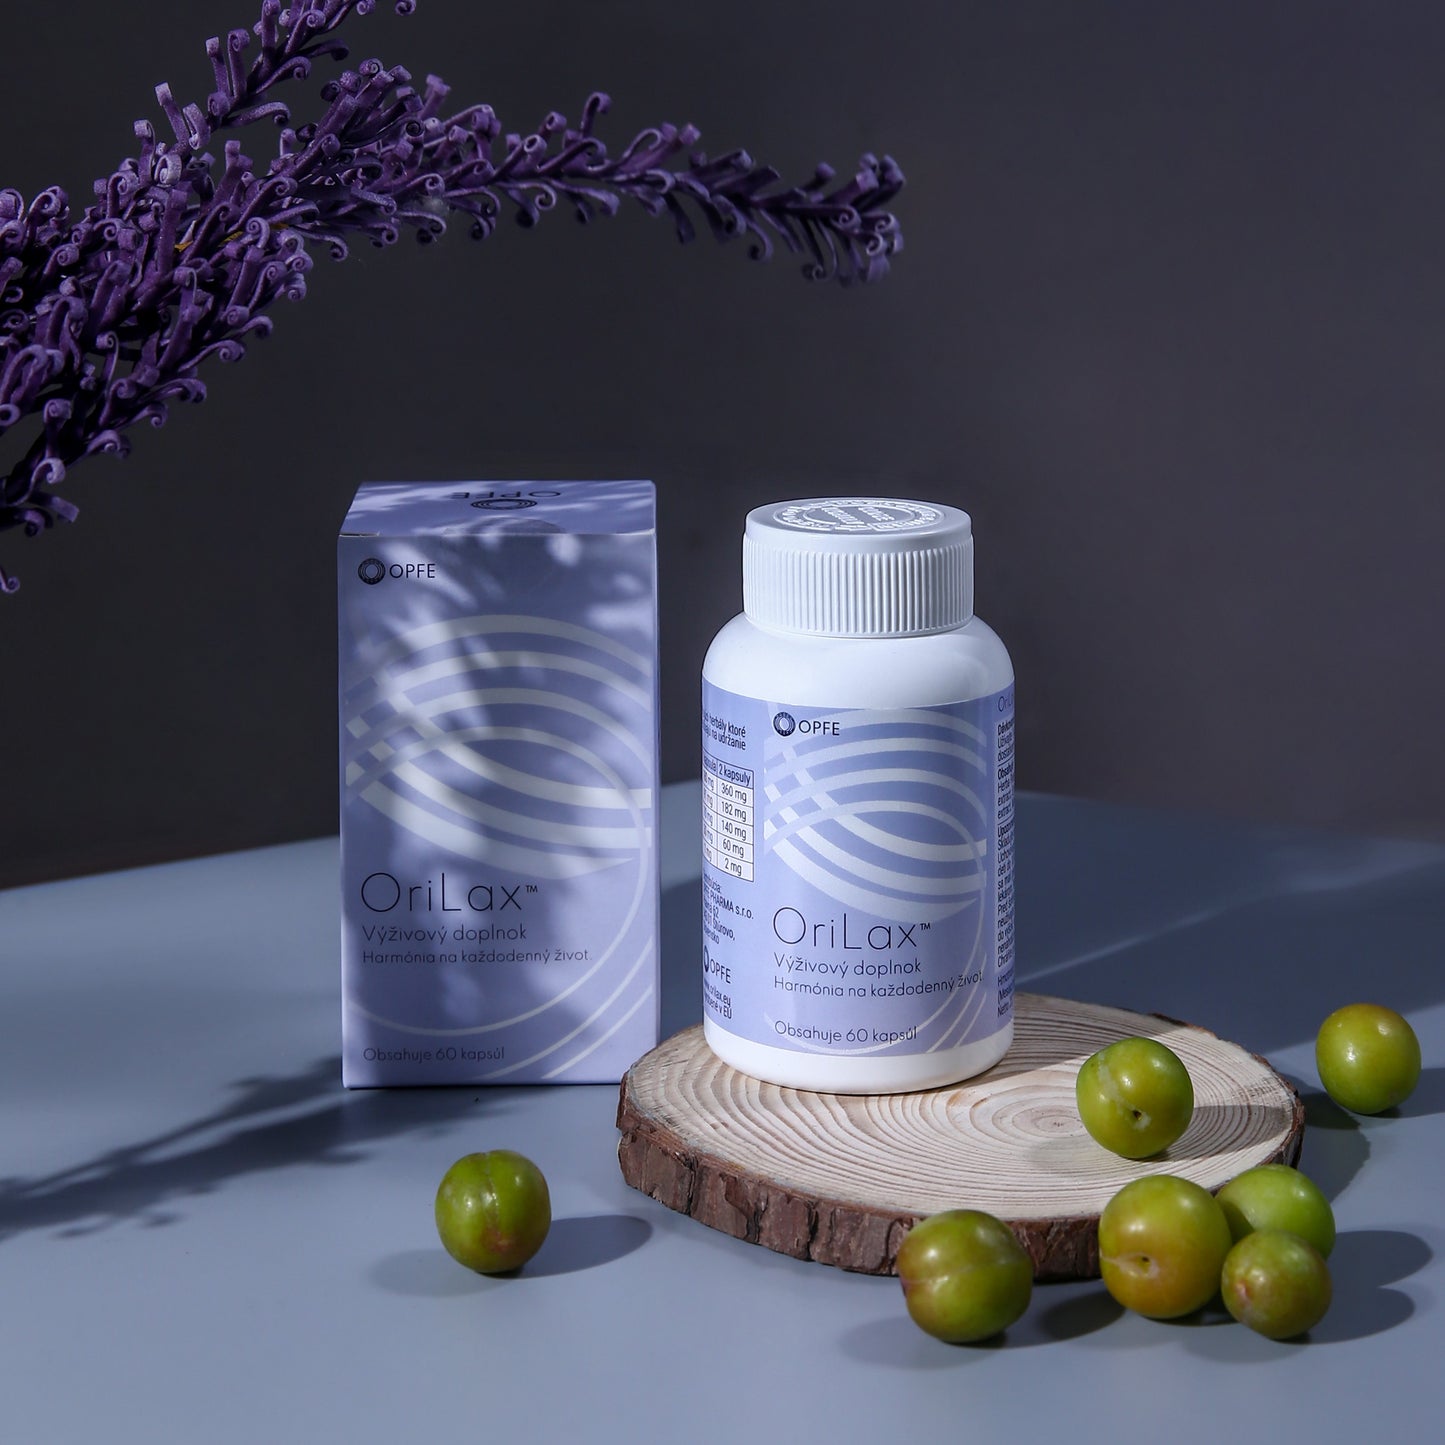 OPFE OriLax, Sleep Health (Made in EU) 100% Natural Herbs